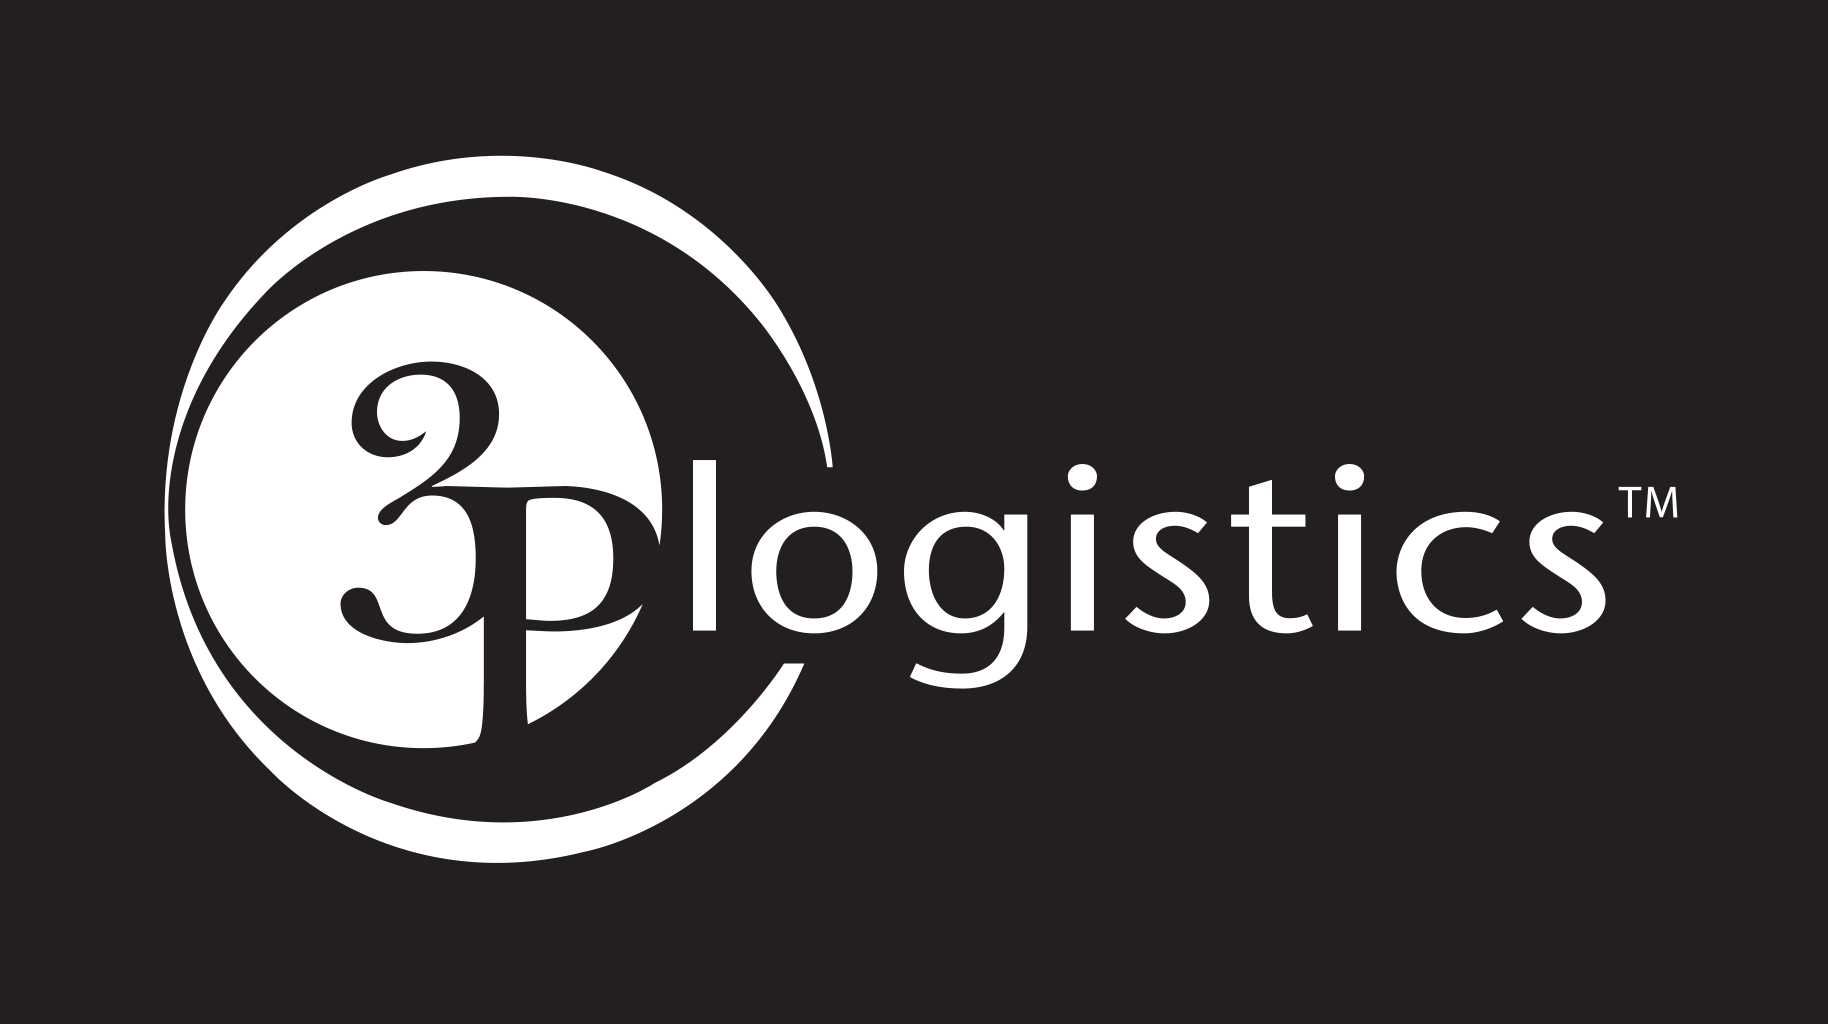 3p Logistics